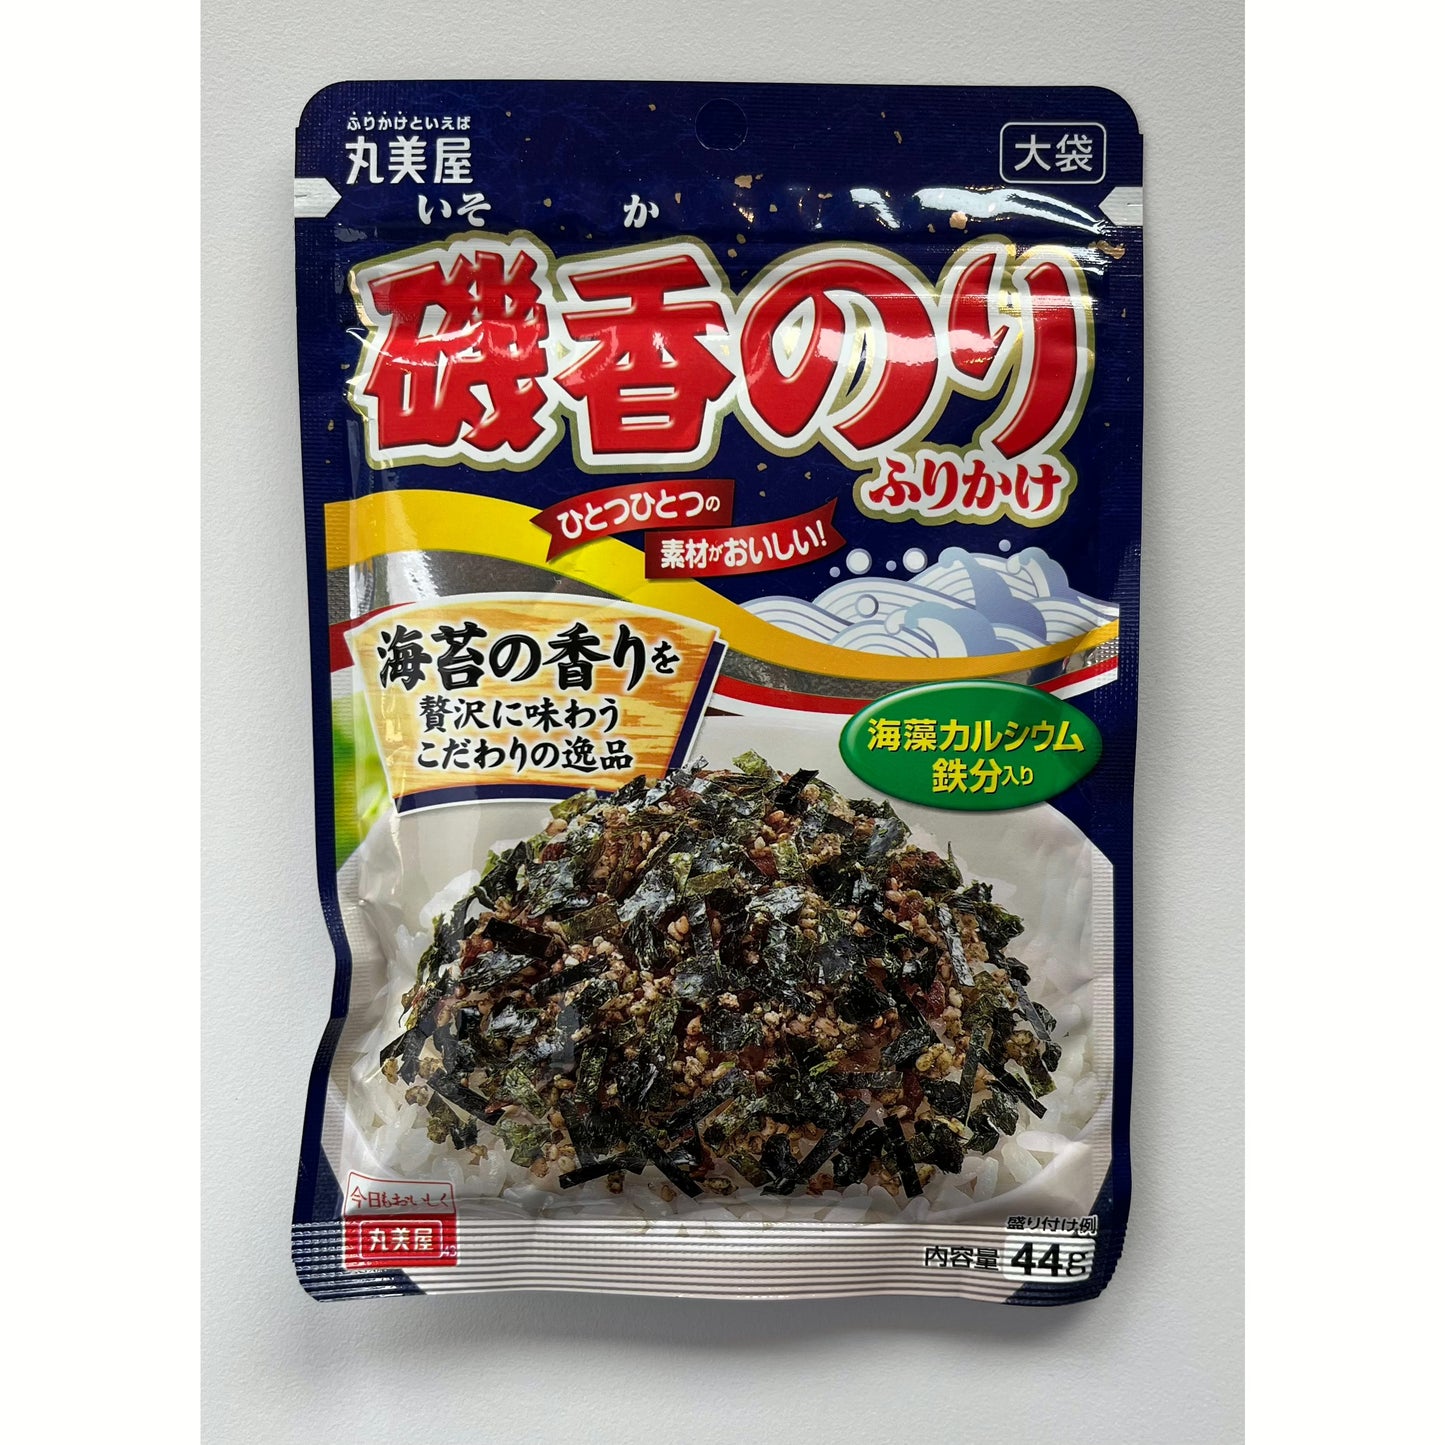 Marumiya Seaweed "Isoka Nori" Furikake